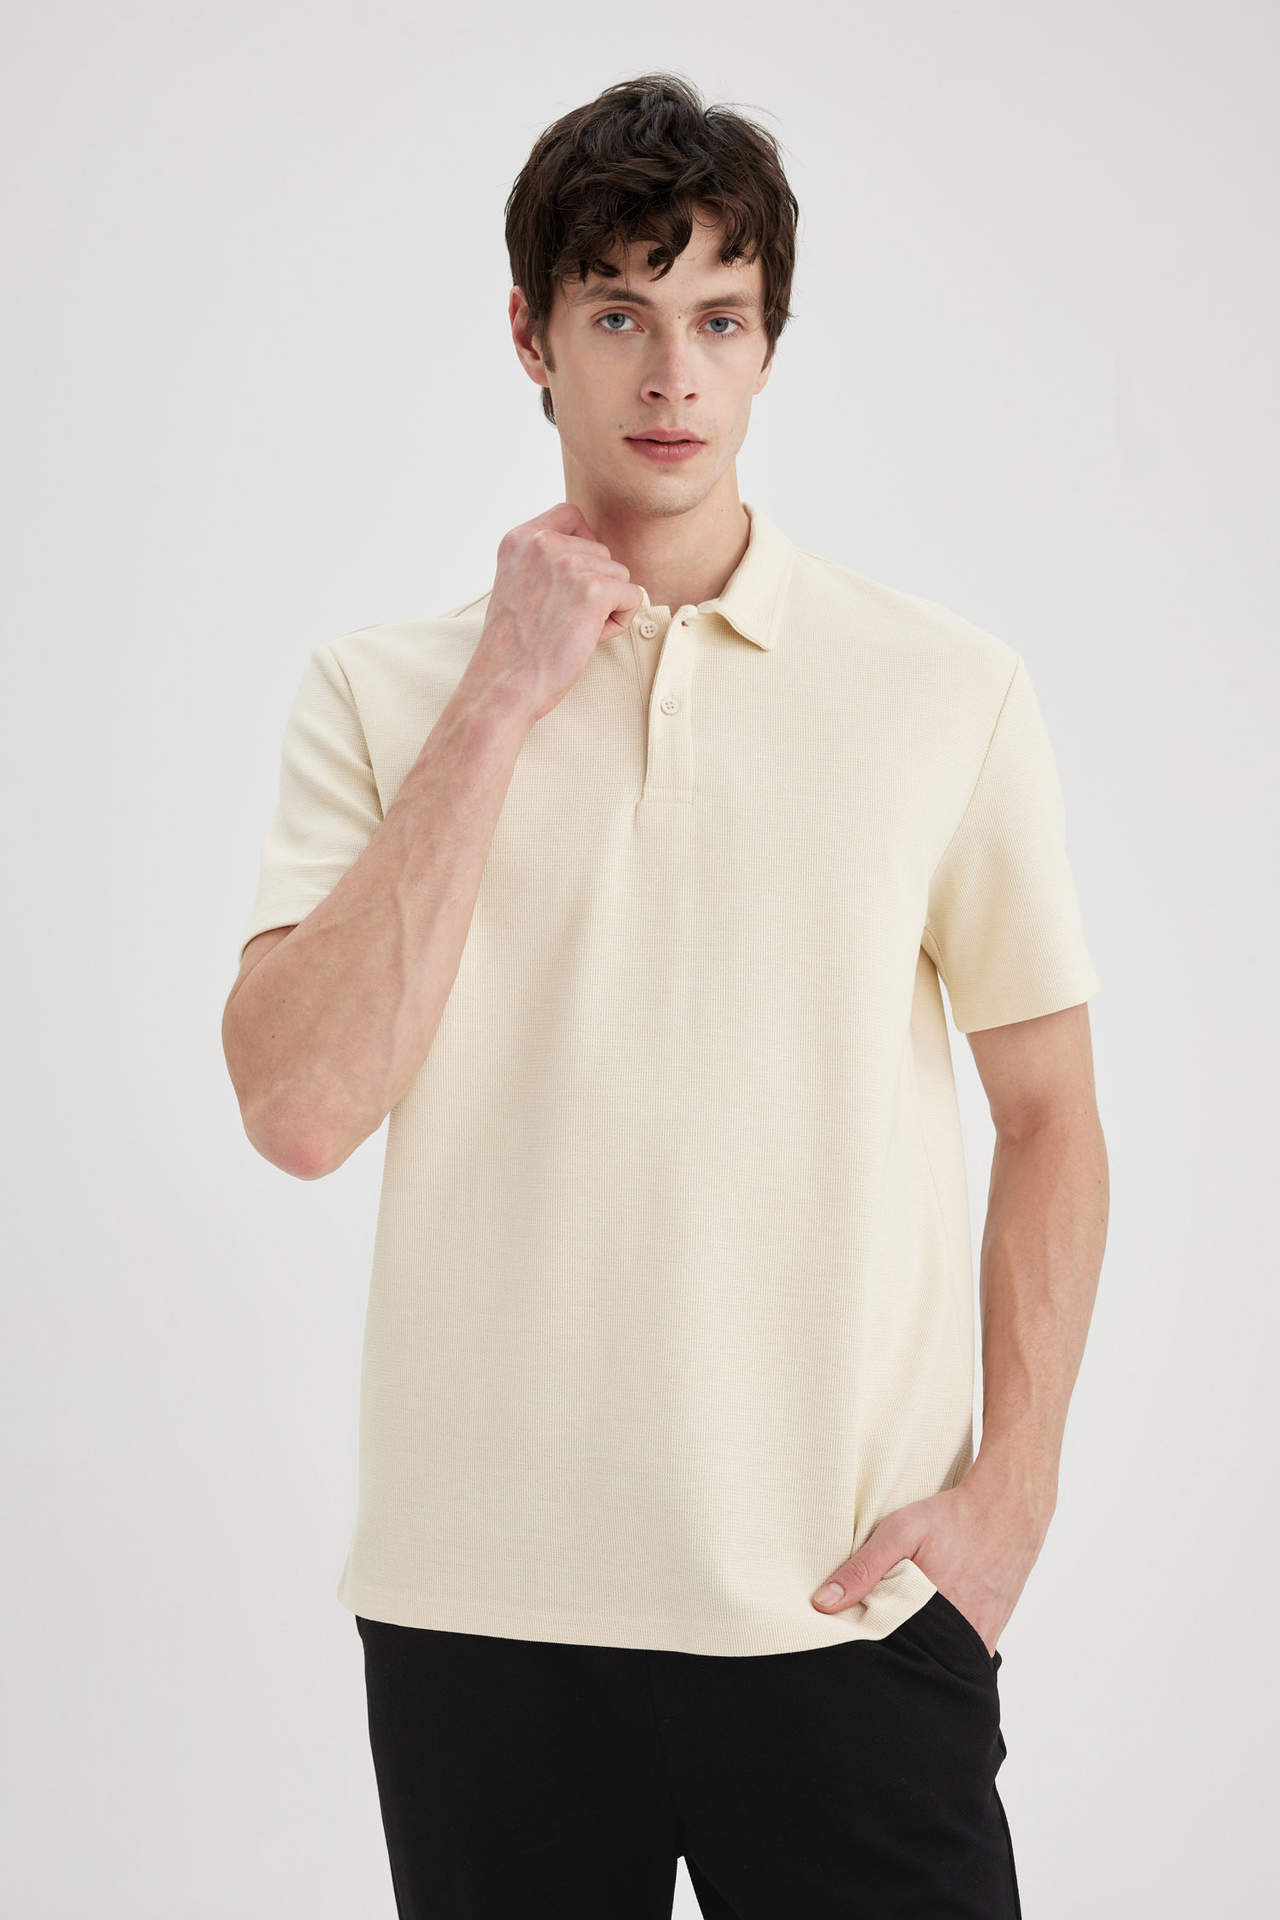 DEFACTO New Regular Fit Polo Collar Polo T-Shirt